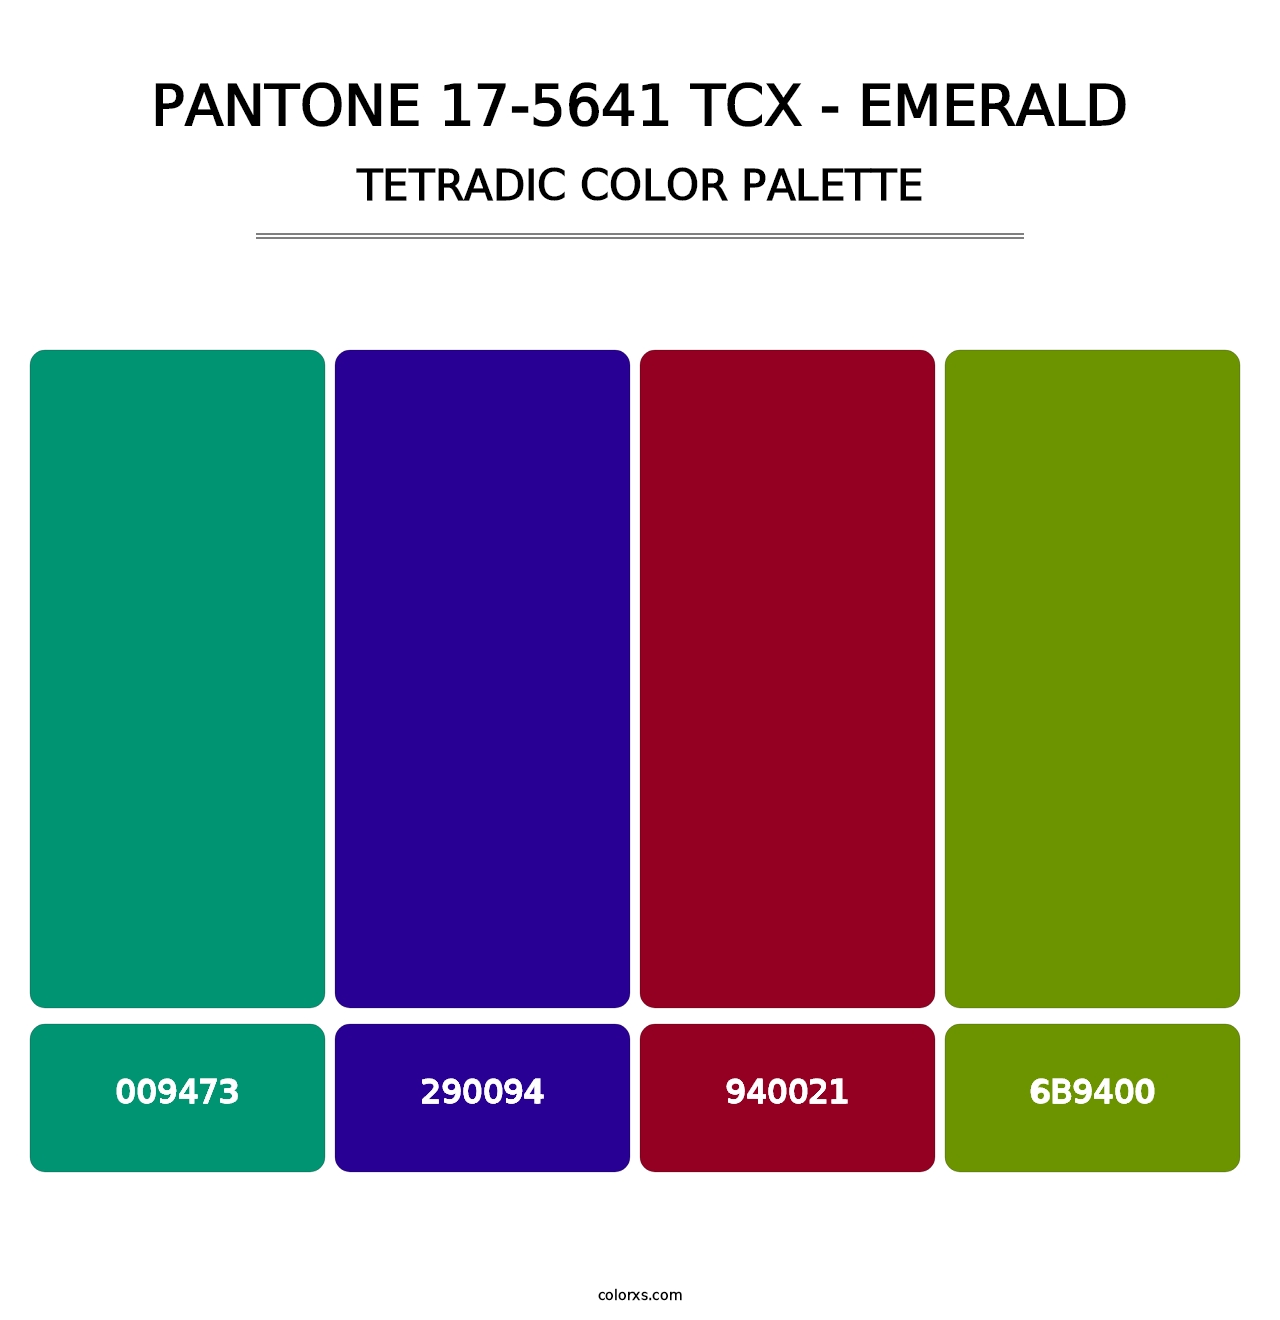 PANTONE 17-5641 TCX - Emerald - Tetradic Color Palette